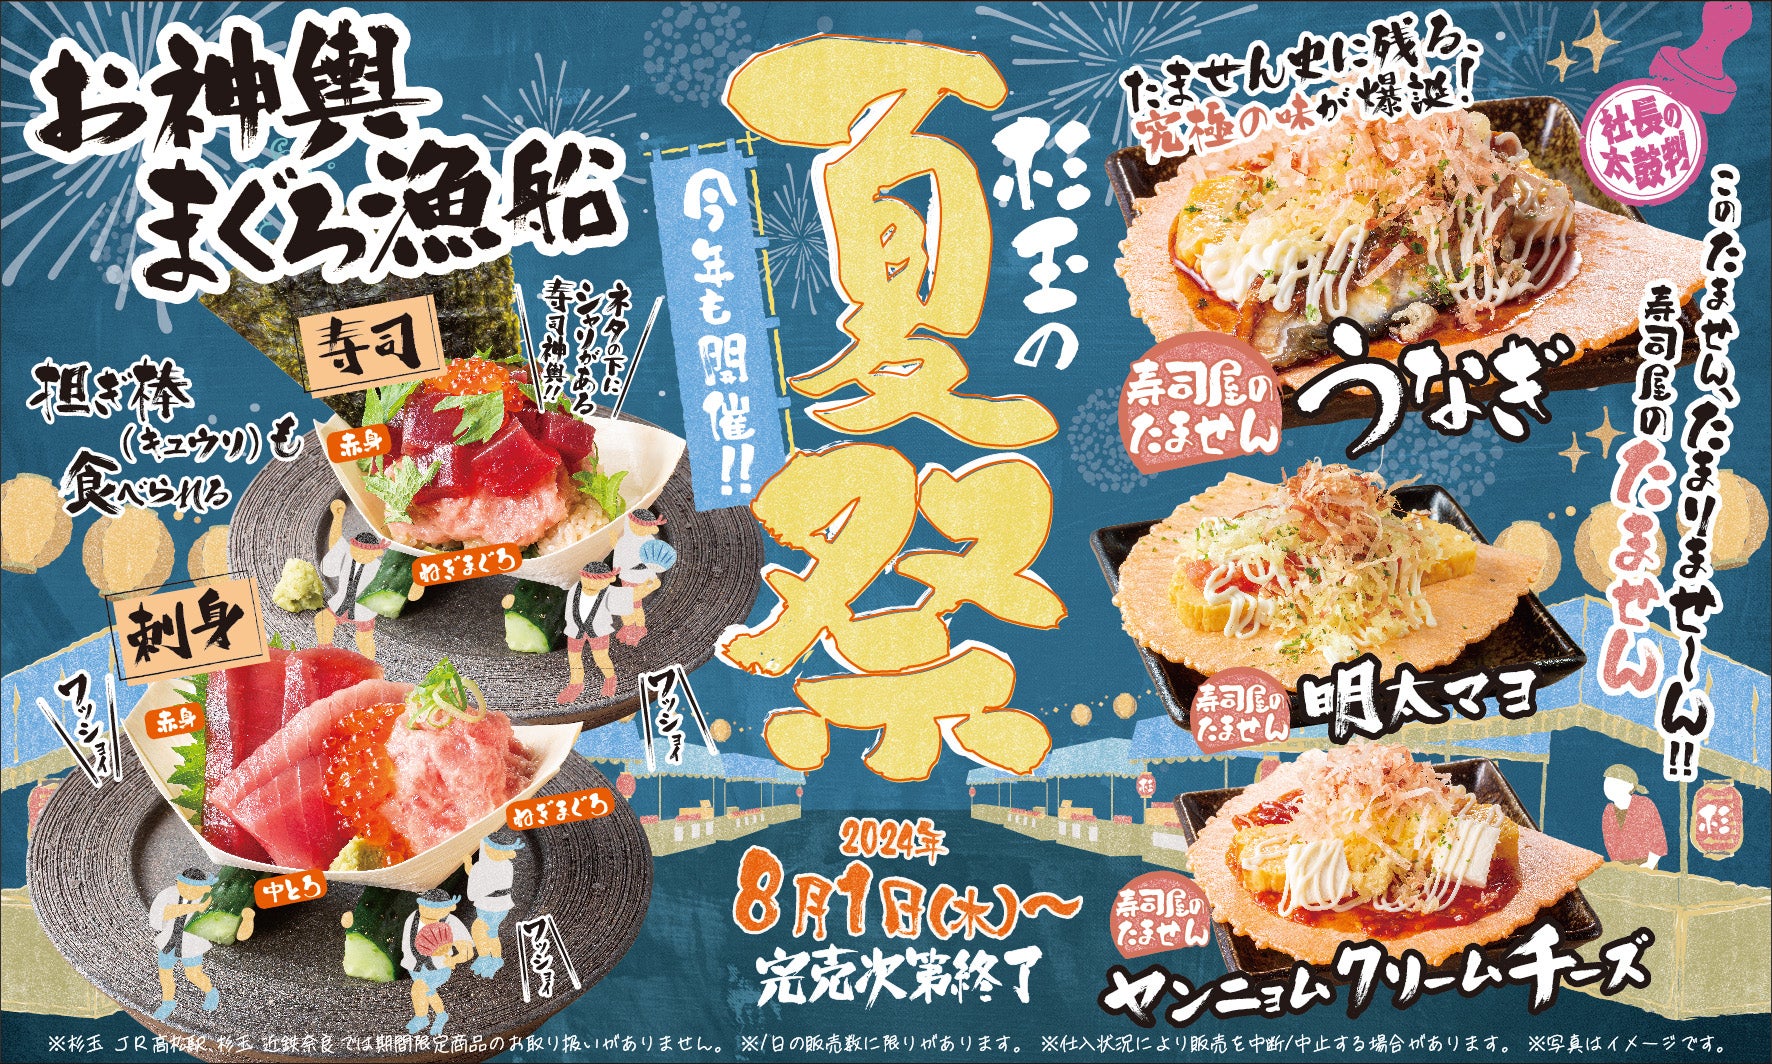 BLANC FUJIが富士山の物語を五感で味わう夏季限定ディナー開始！